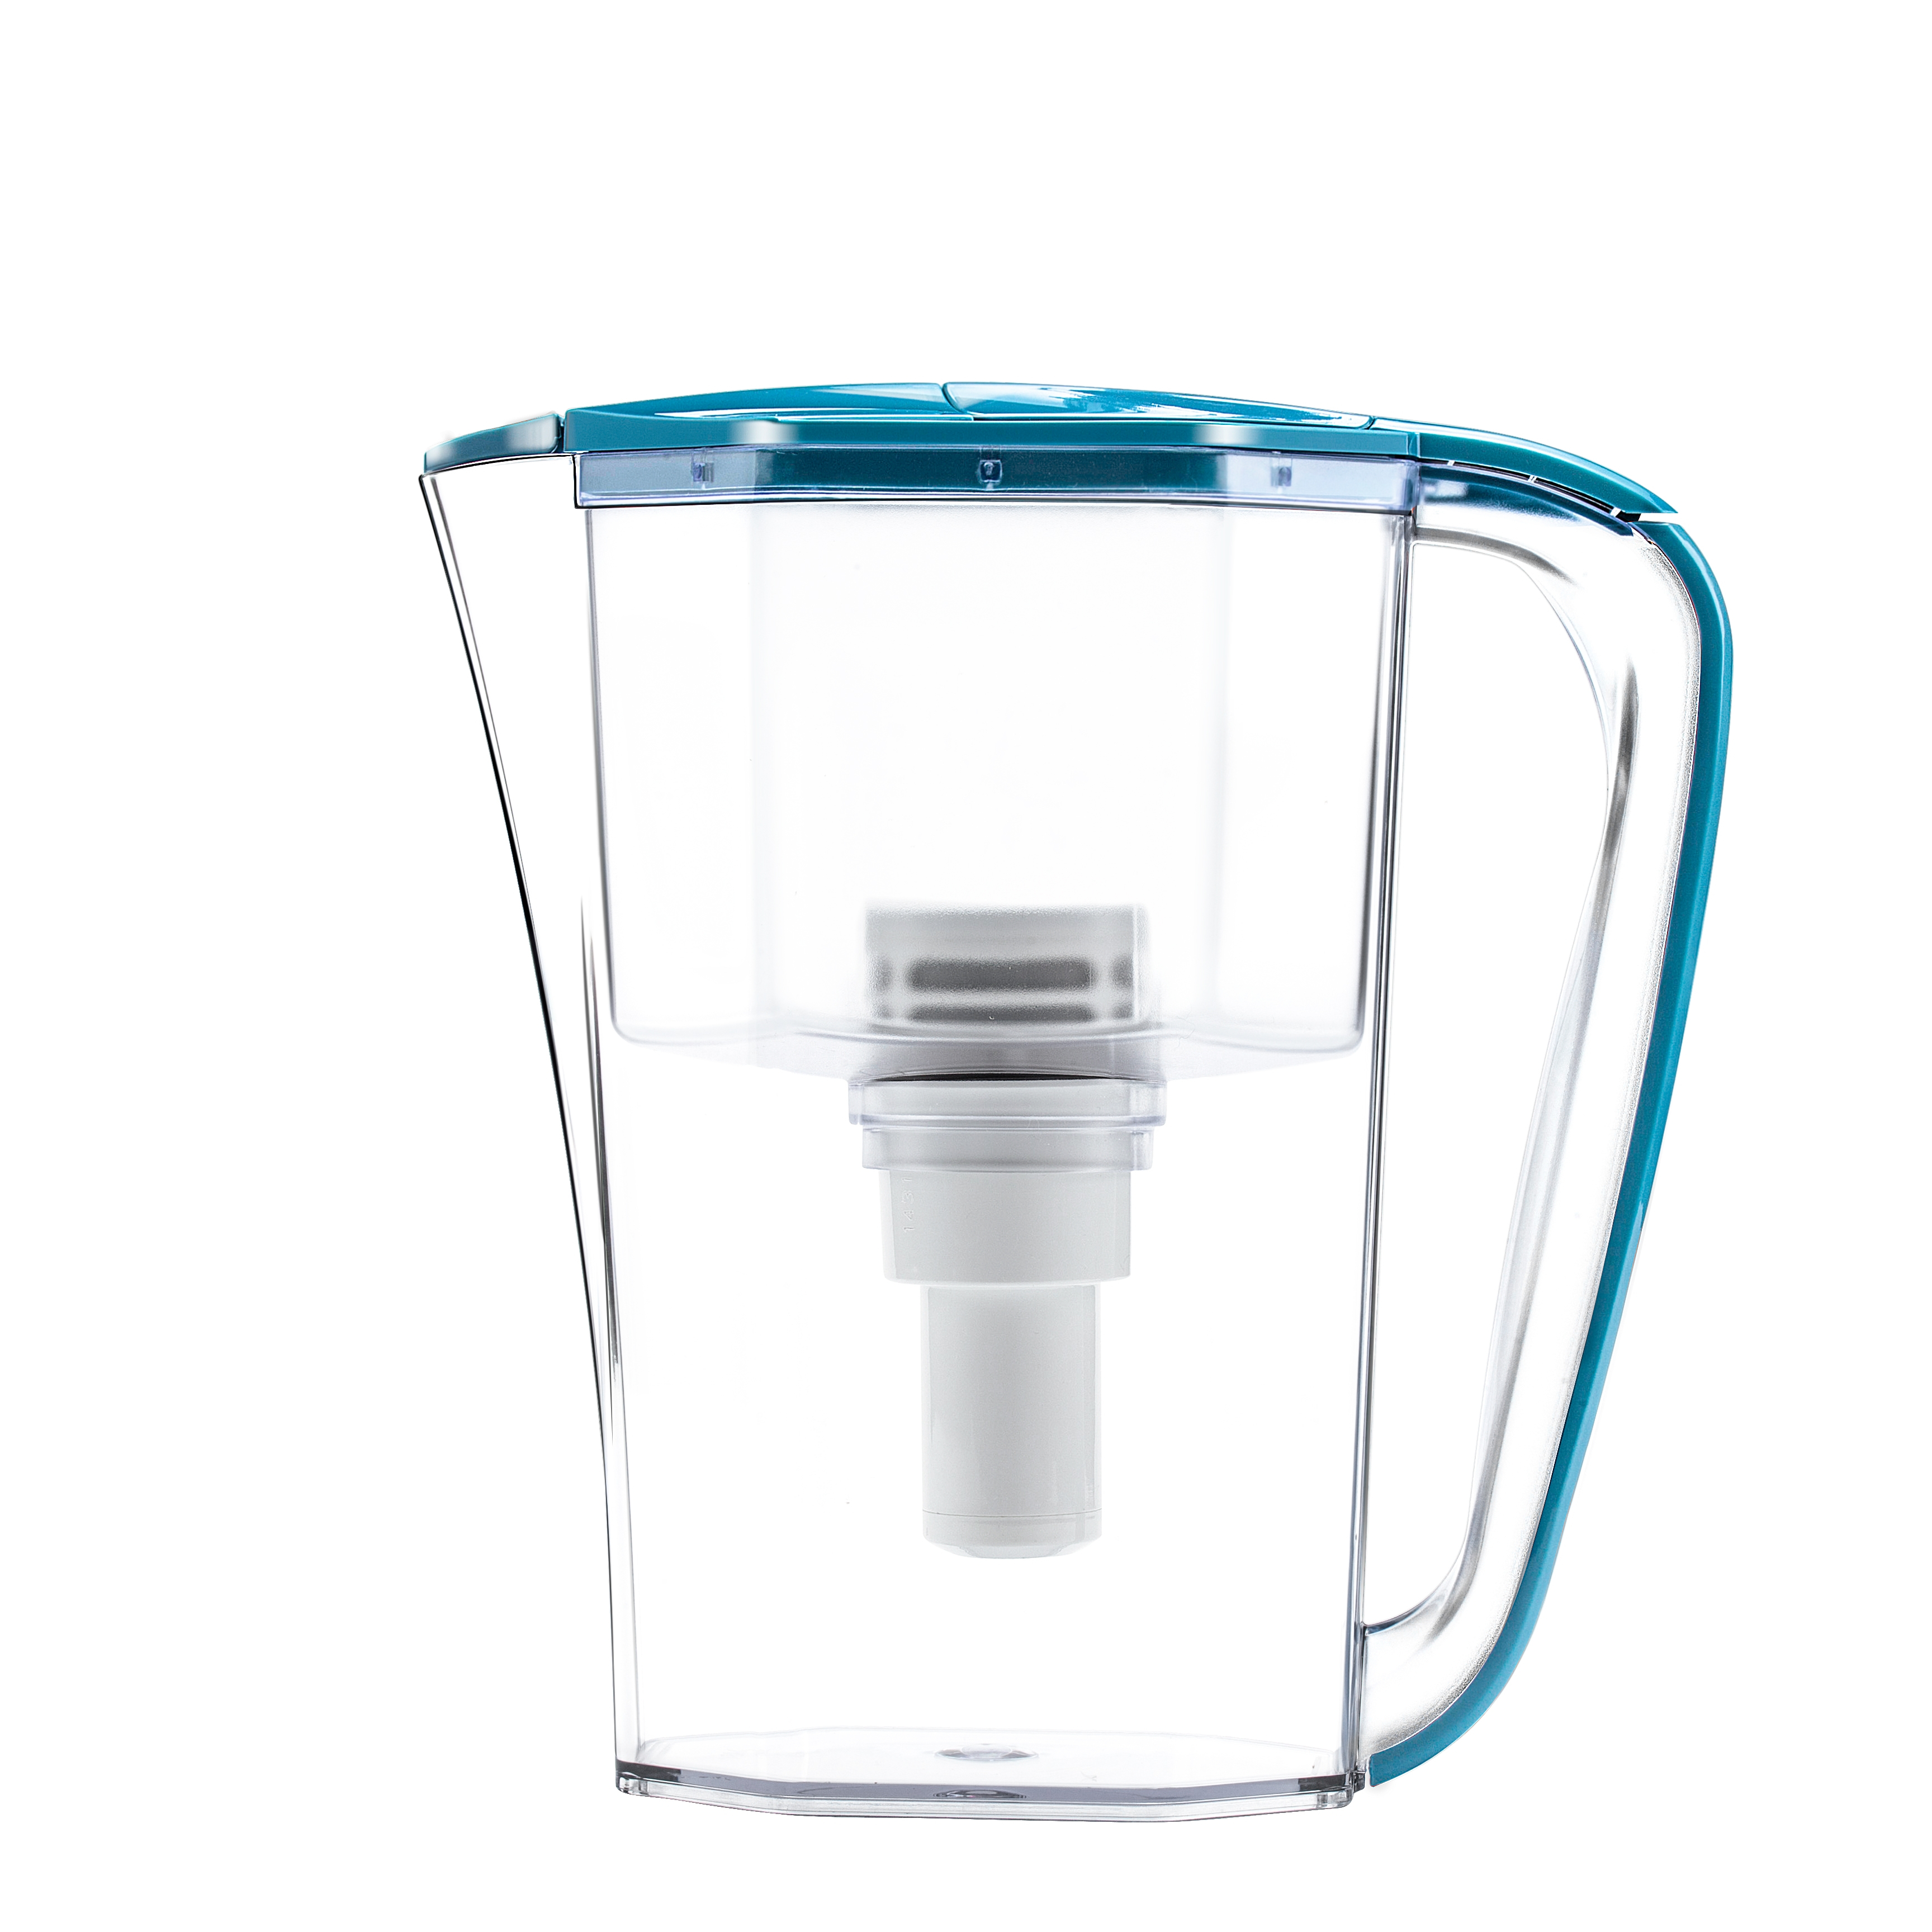 3.5L Orange popular water purifier mug with high quality water filter